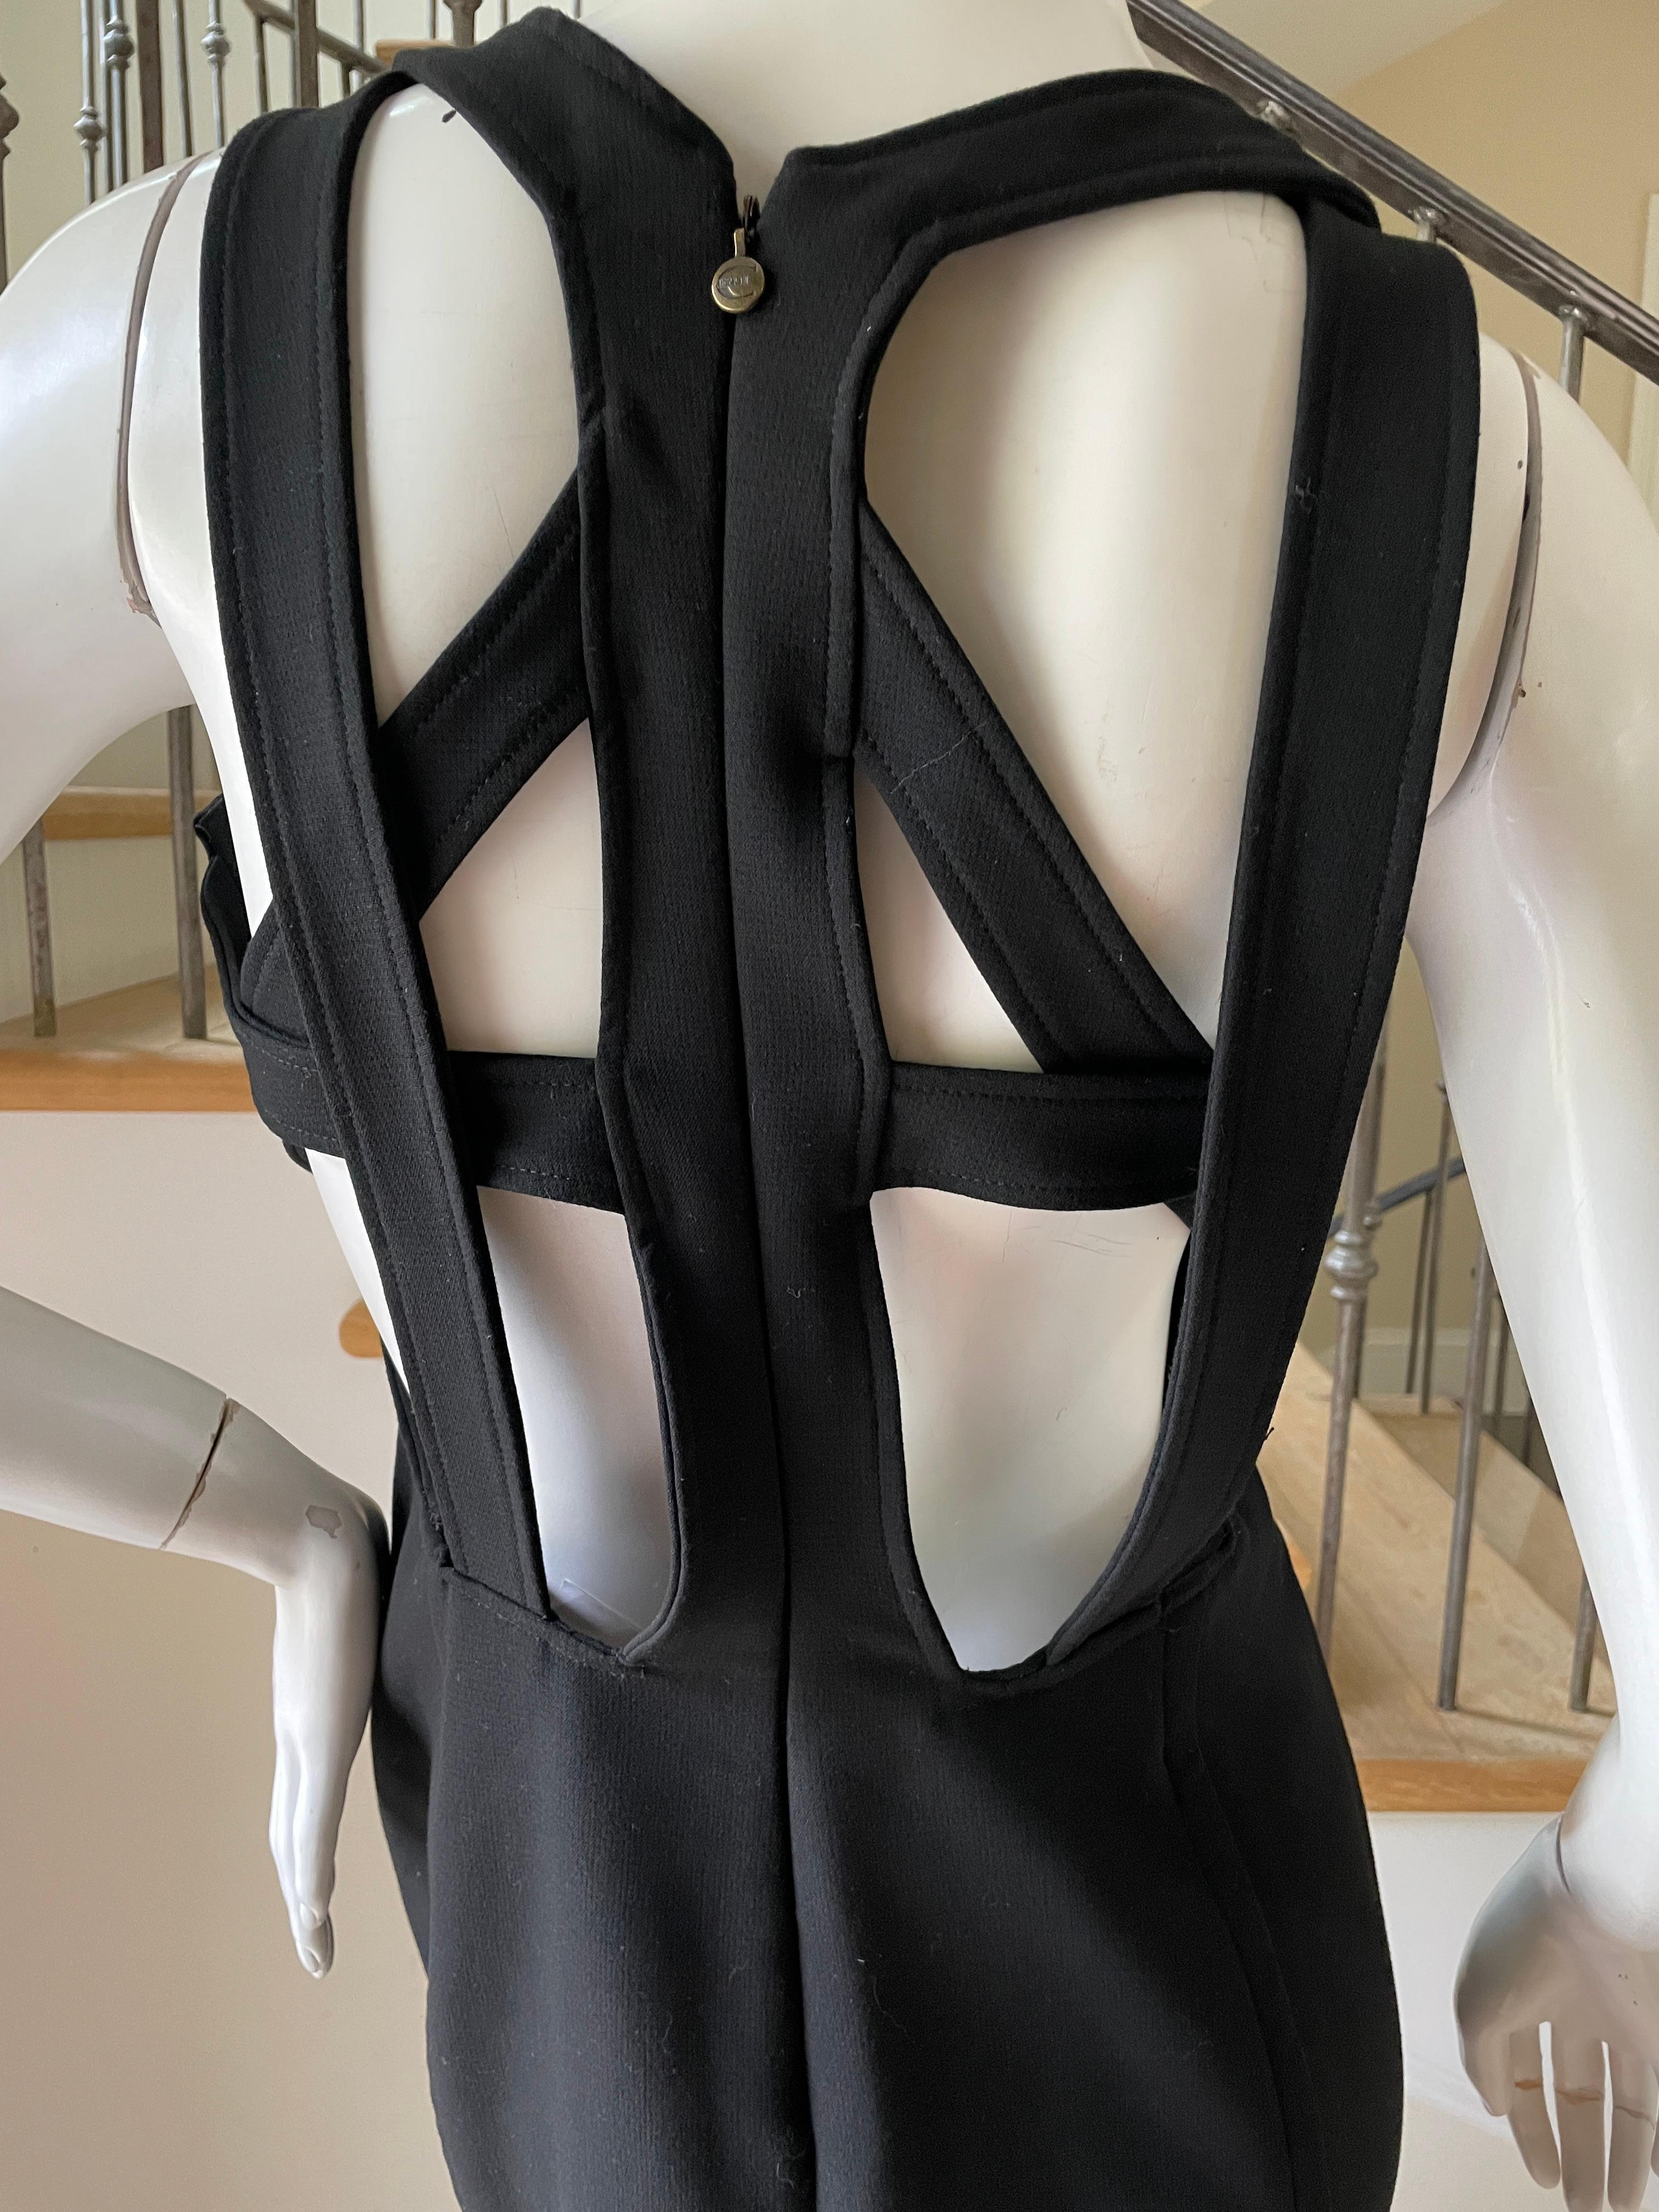 Roberto Cavalli for Just Cavalli Vintage Little Black Dress w Bondage Strap Back In Excellent Condition For Sale In Cloverdale, CA